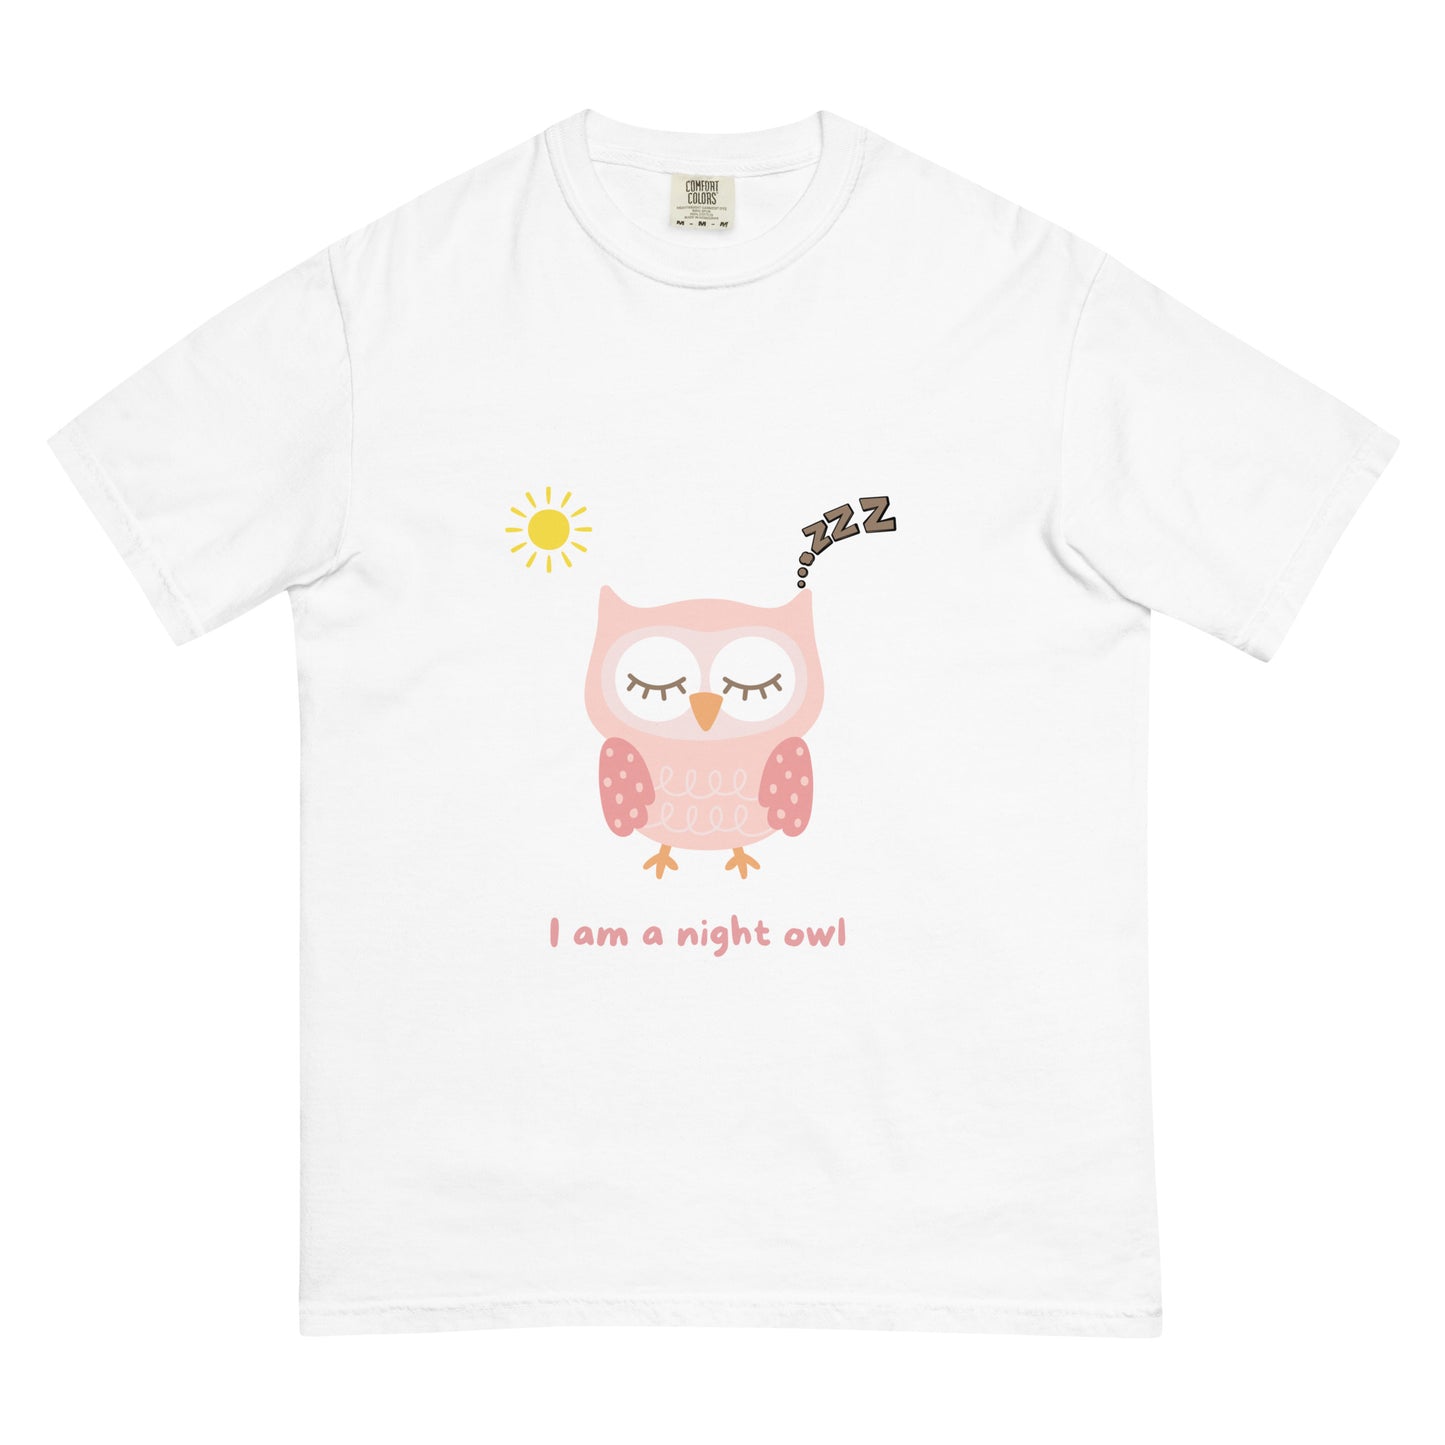 Owl, Cute, Adorable, Sleepy, Soft, Cuddly, Animal Lover, Nature, Peaceful, Animal, Unisex, T-shirt